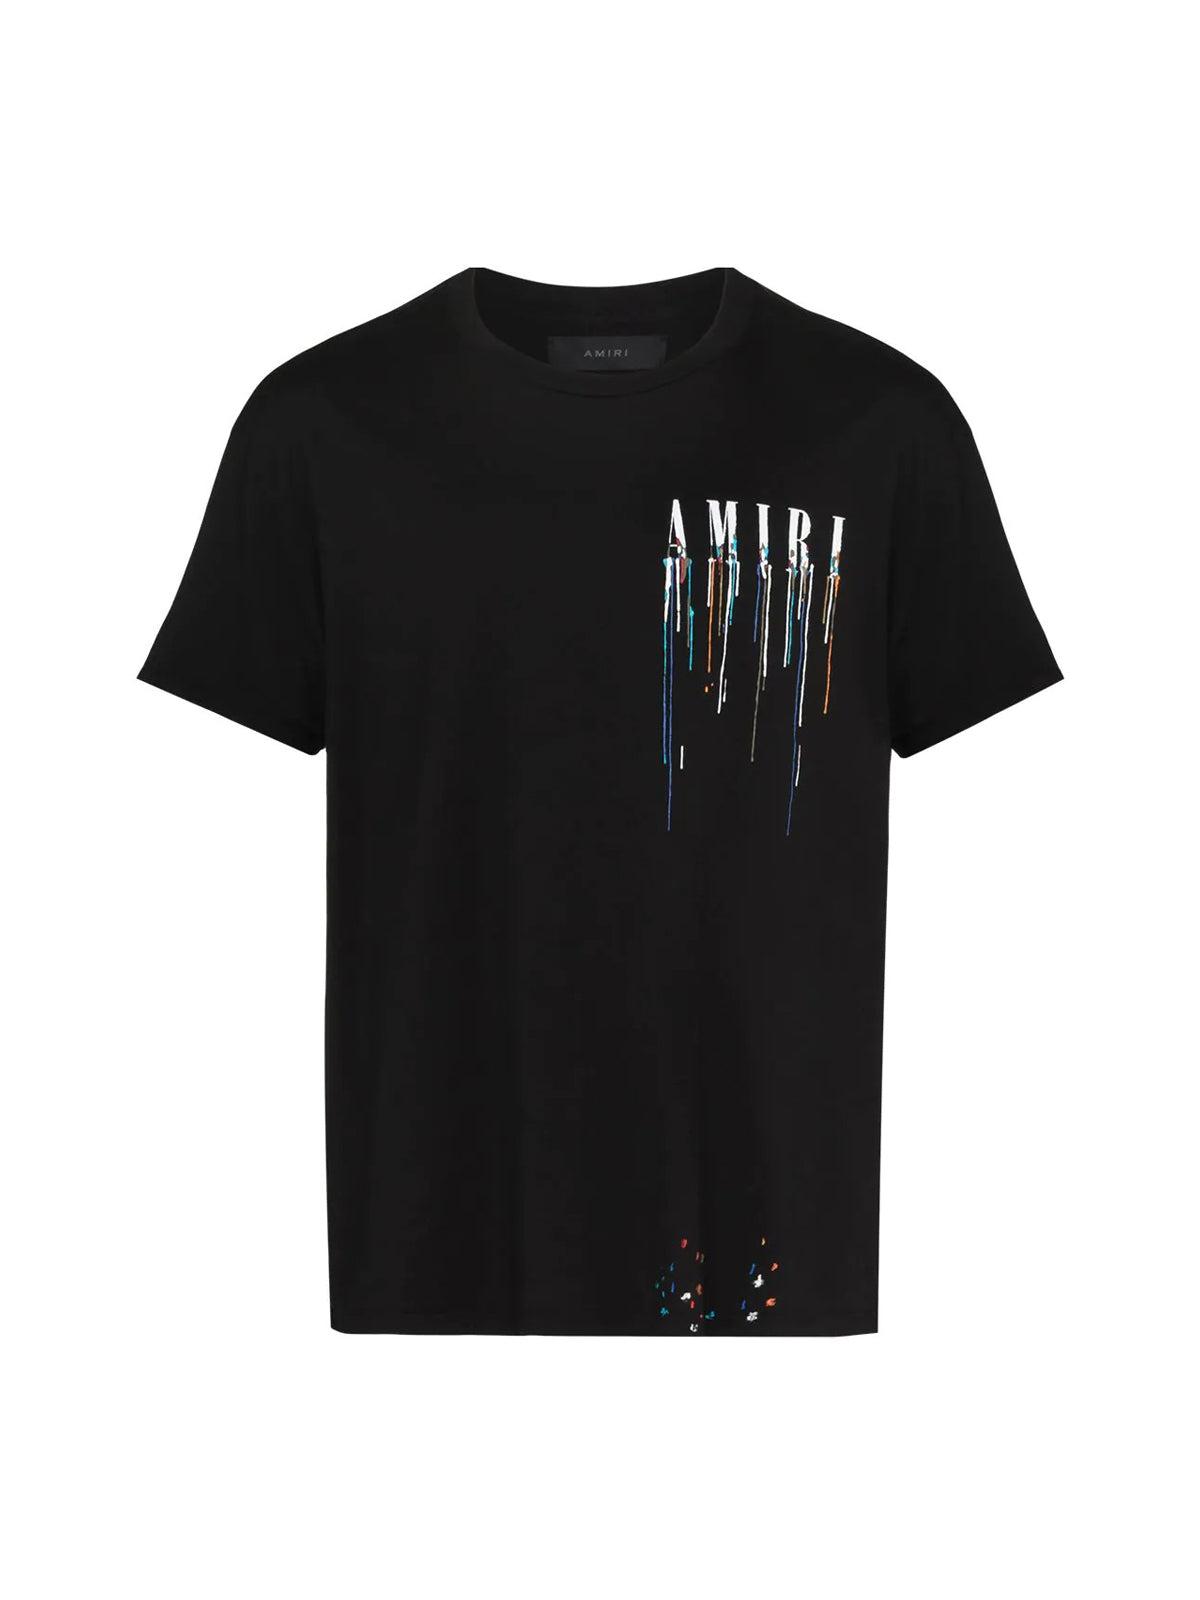 Amiri Cotton Paint-drip Logo T-shirt in Black for Men - Lyst